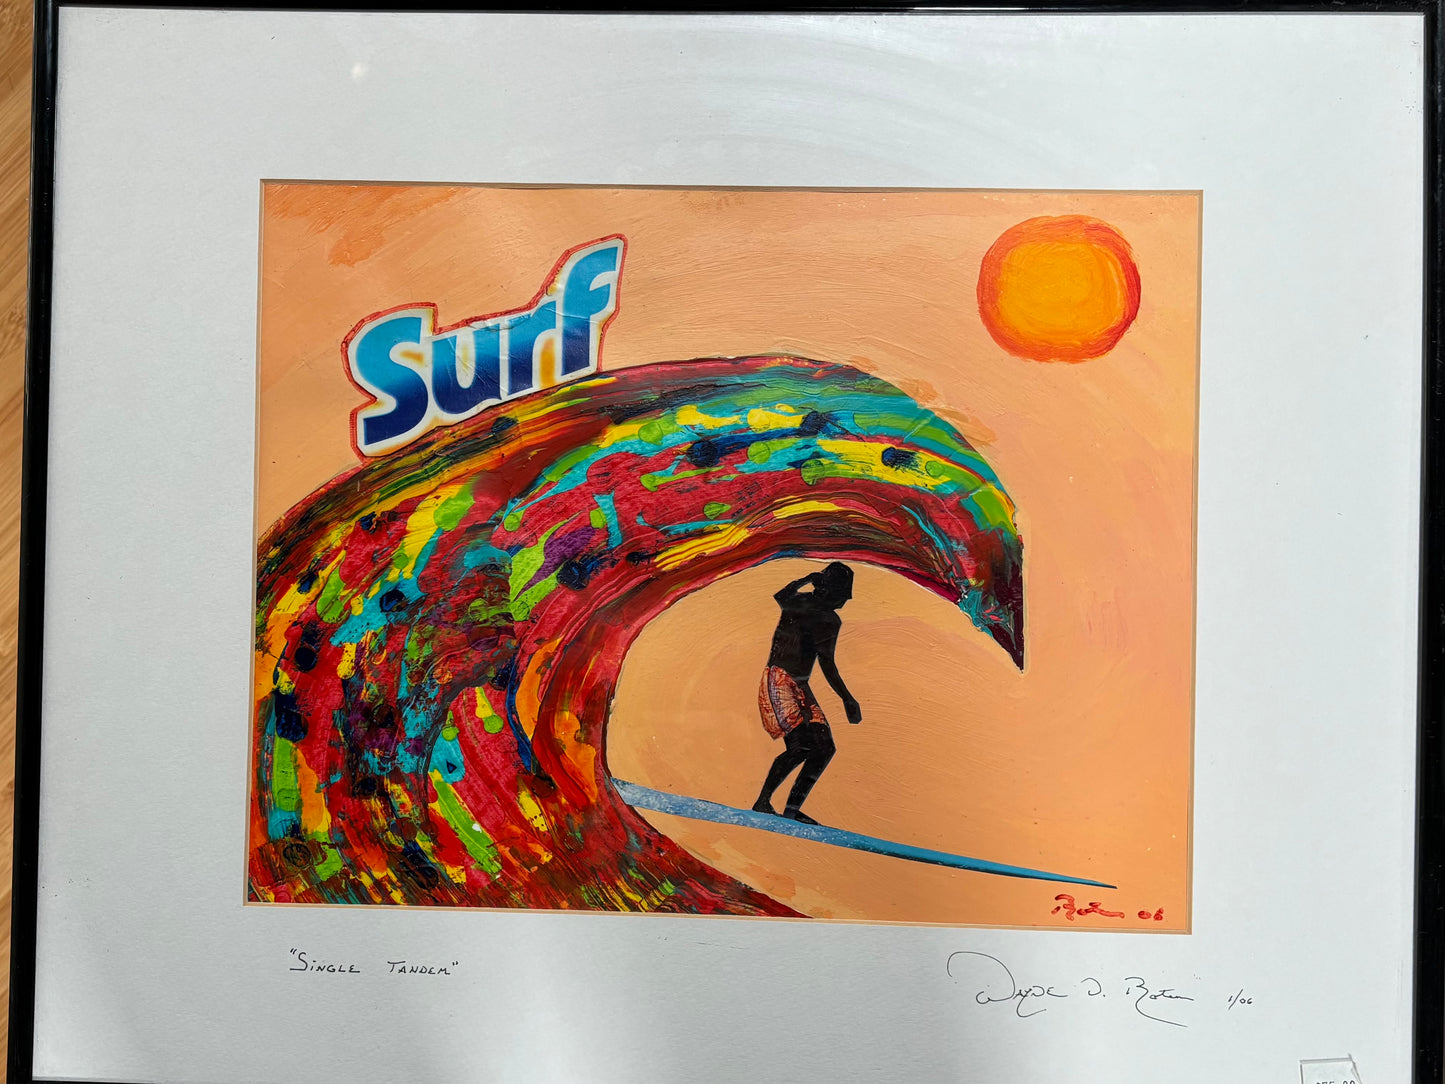 Surf "Single Tandem" by Wayne